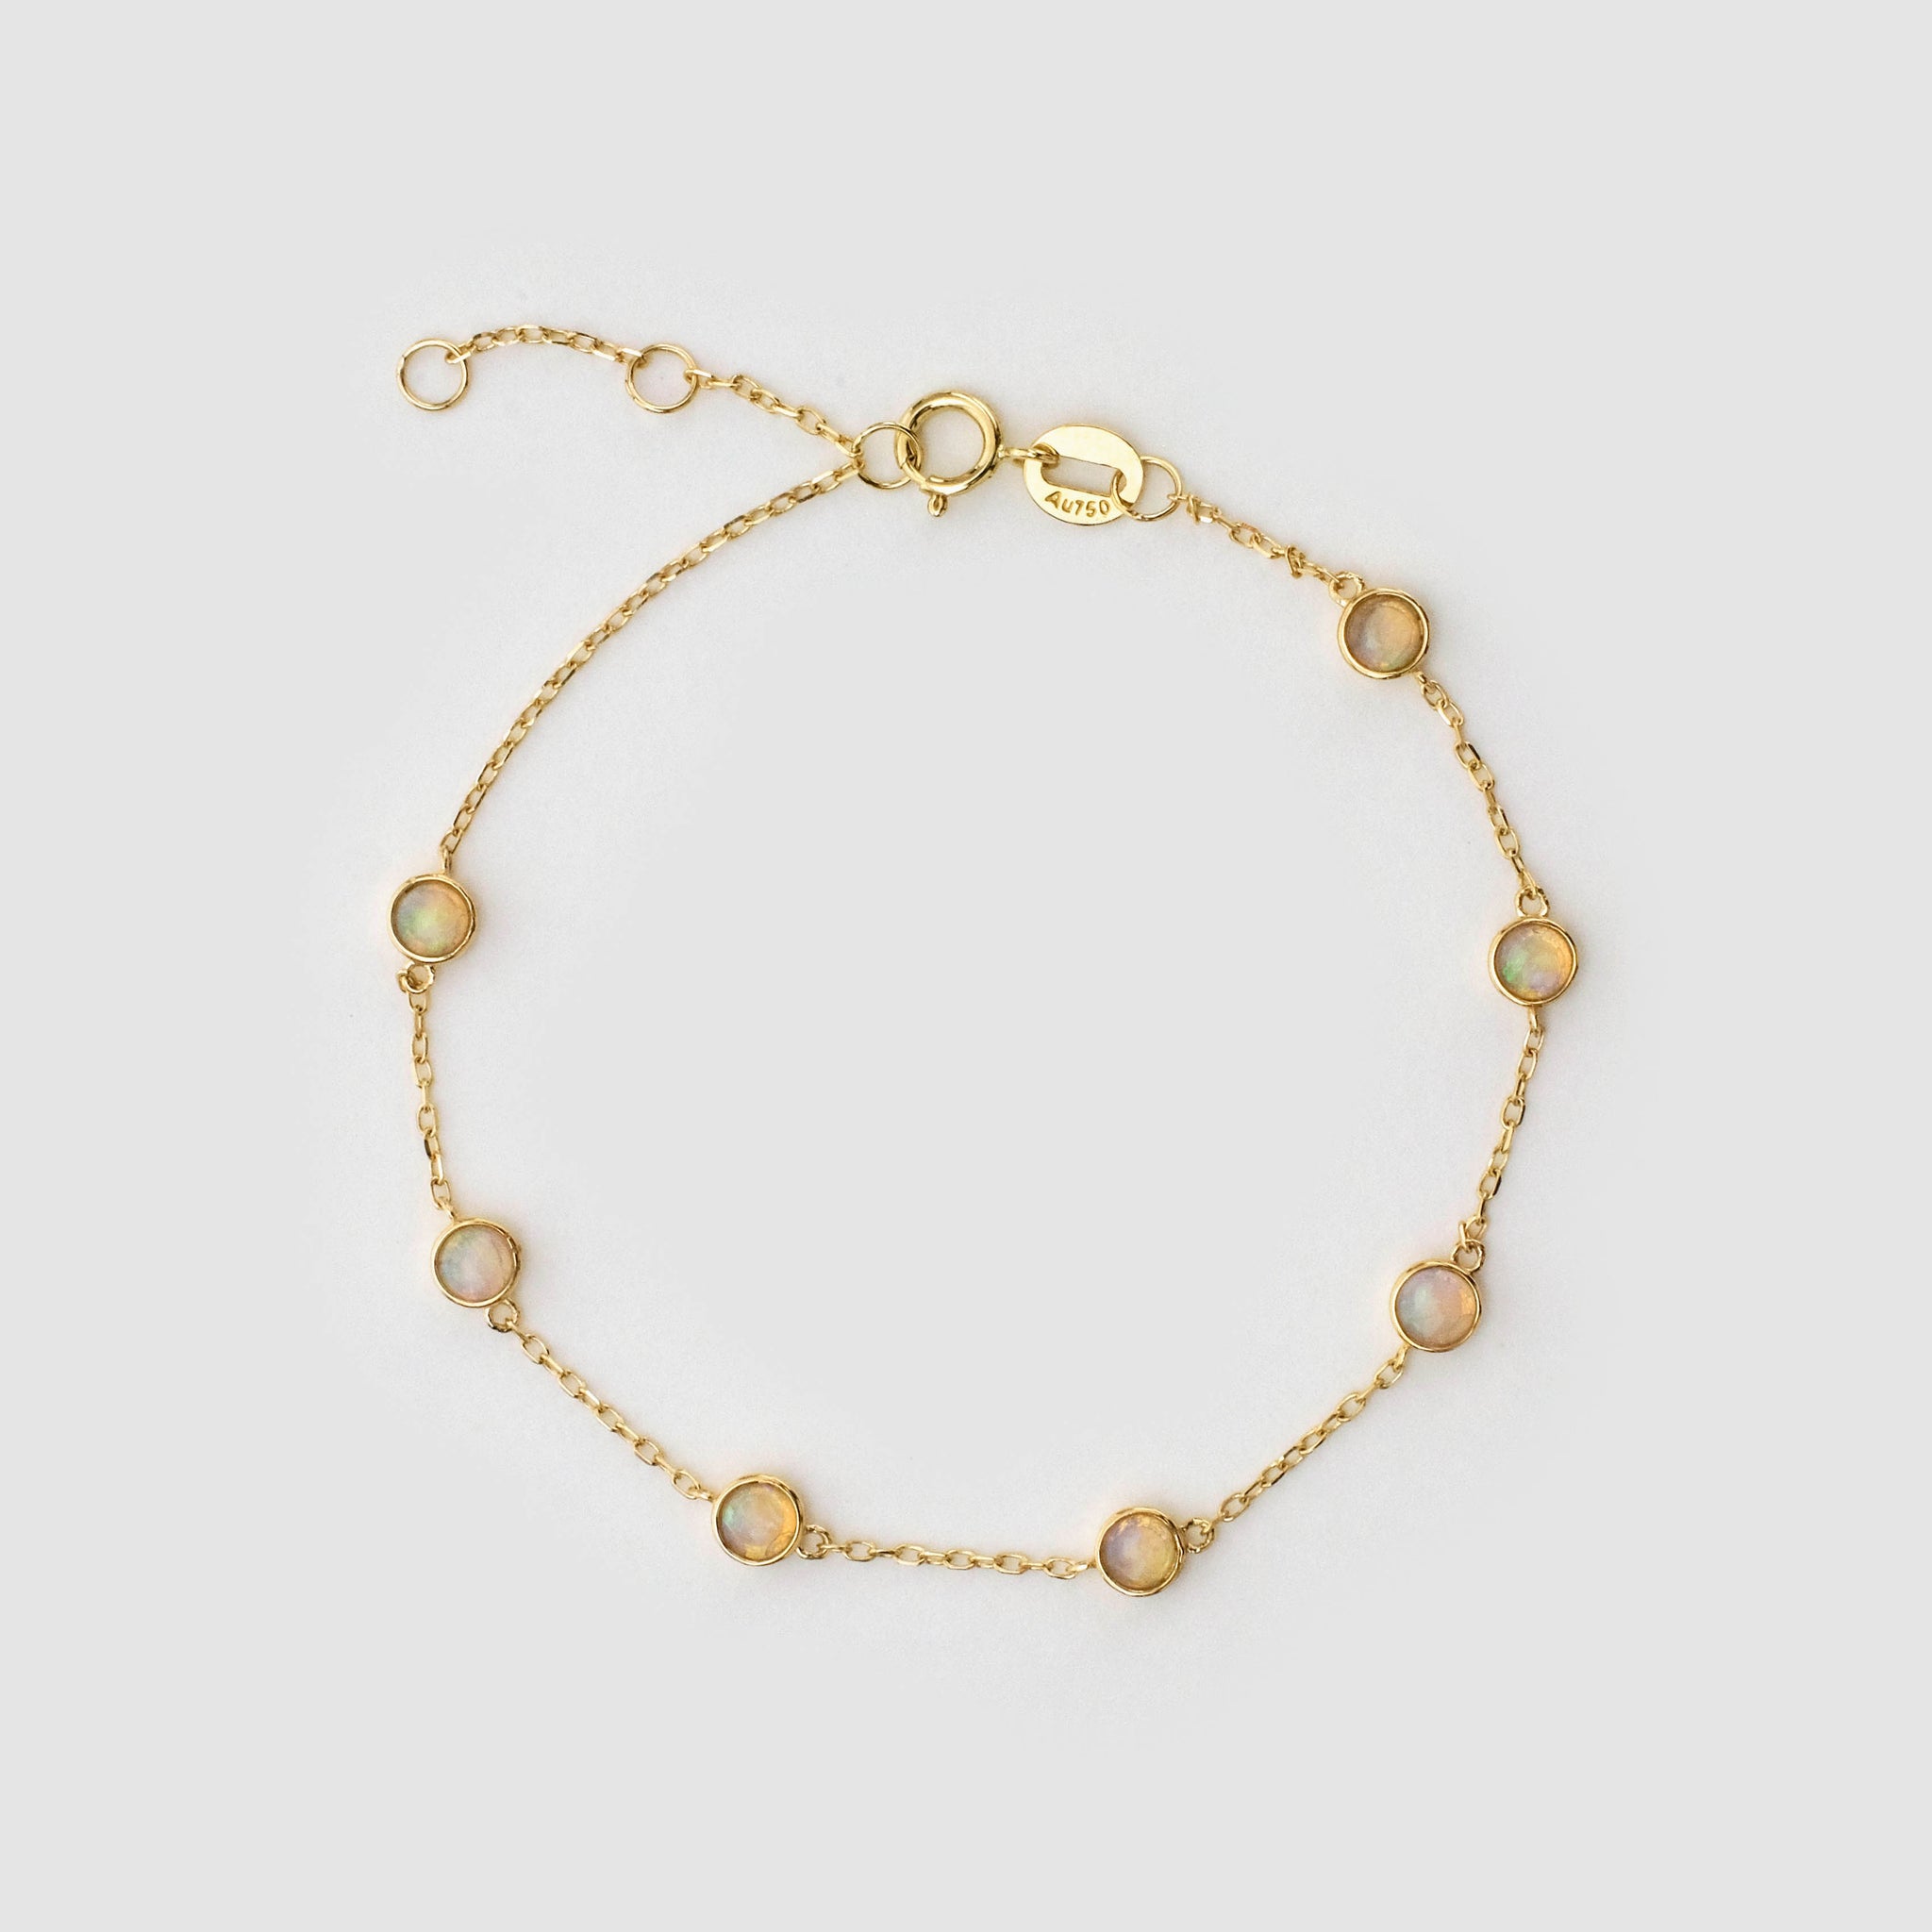 Round Opal Muti-stone Bracelet, 18k solid gold